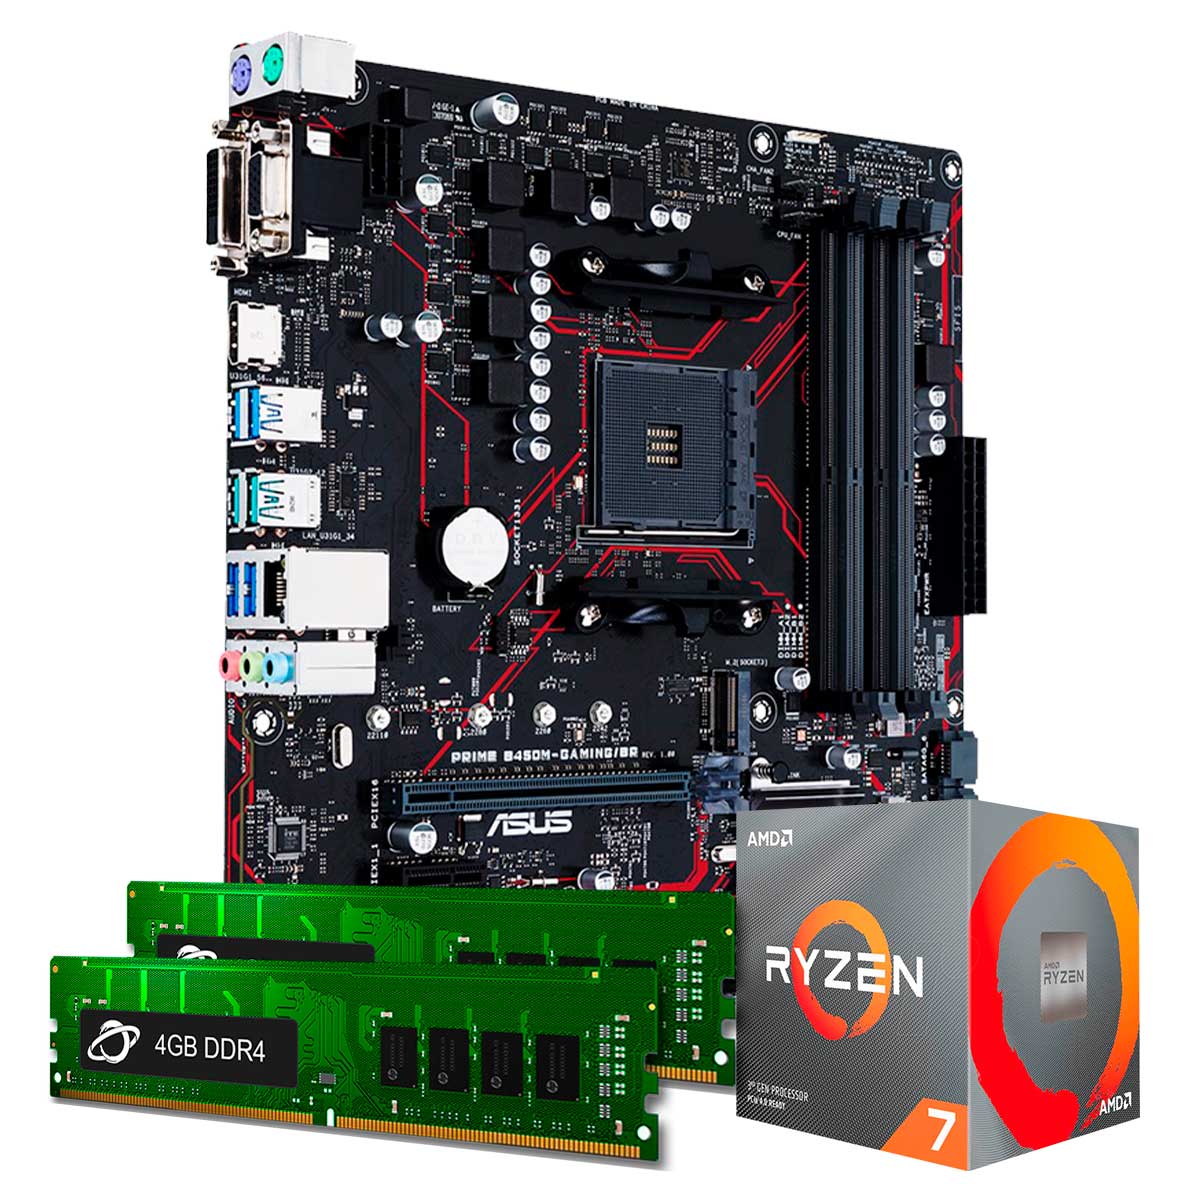 Kit Upgrade Processador AMD Ryzen™ 7 3700X + Placa Mãe Asus PRIME B450M GAMING/BR + Memória 8GB DDR4